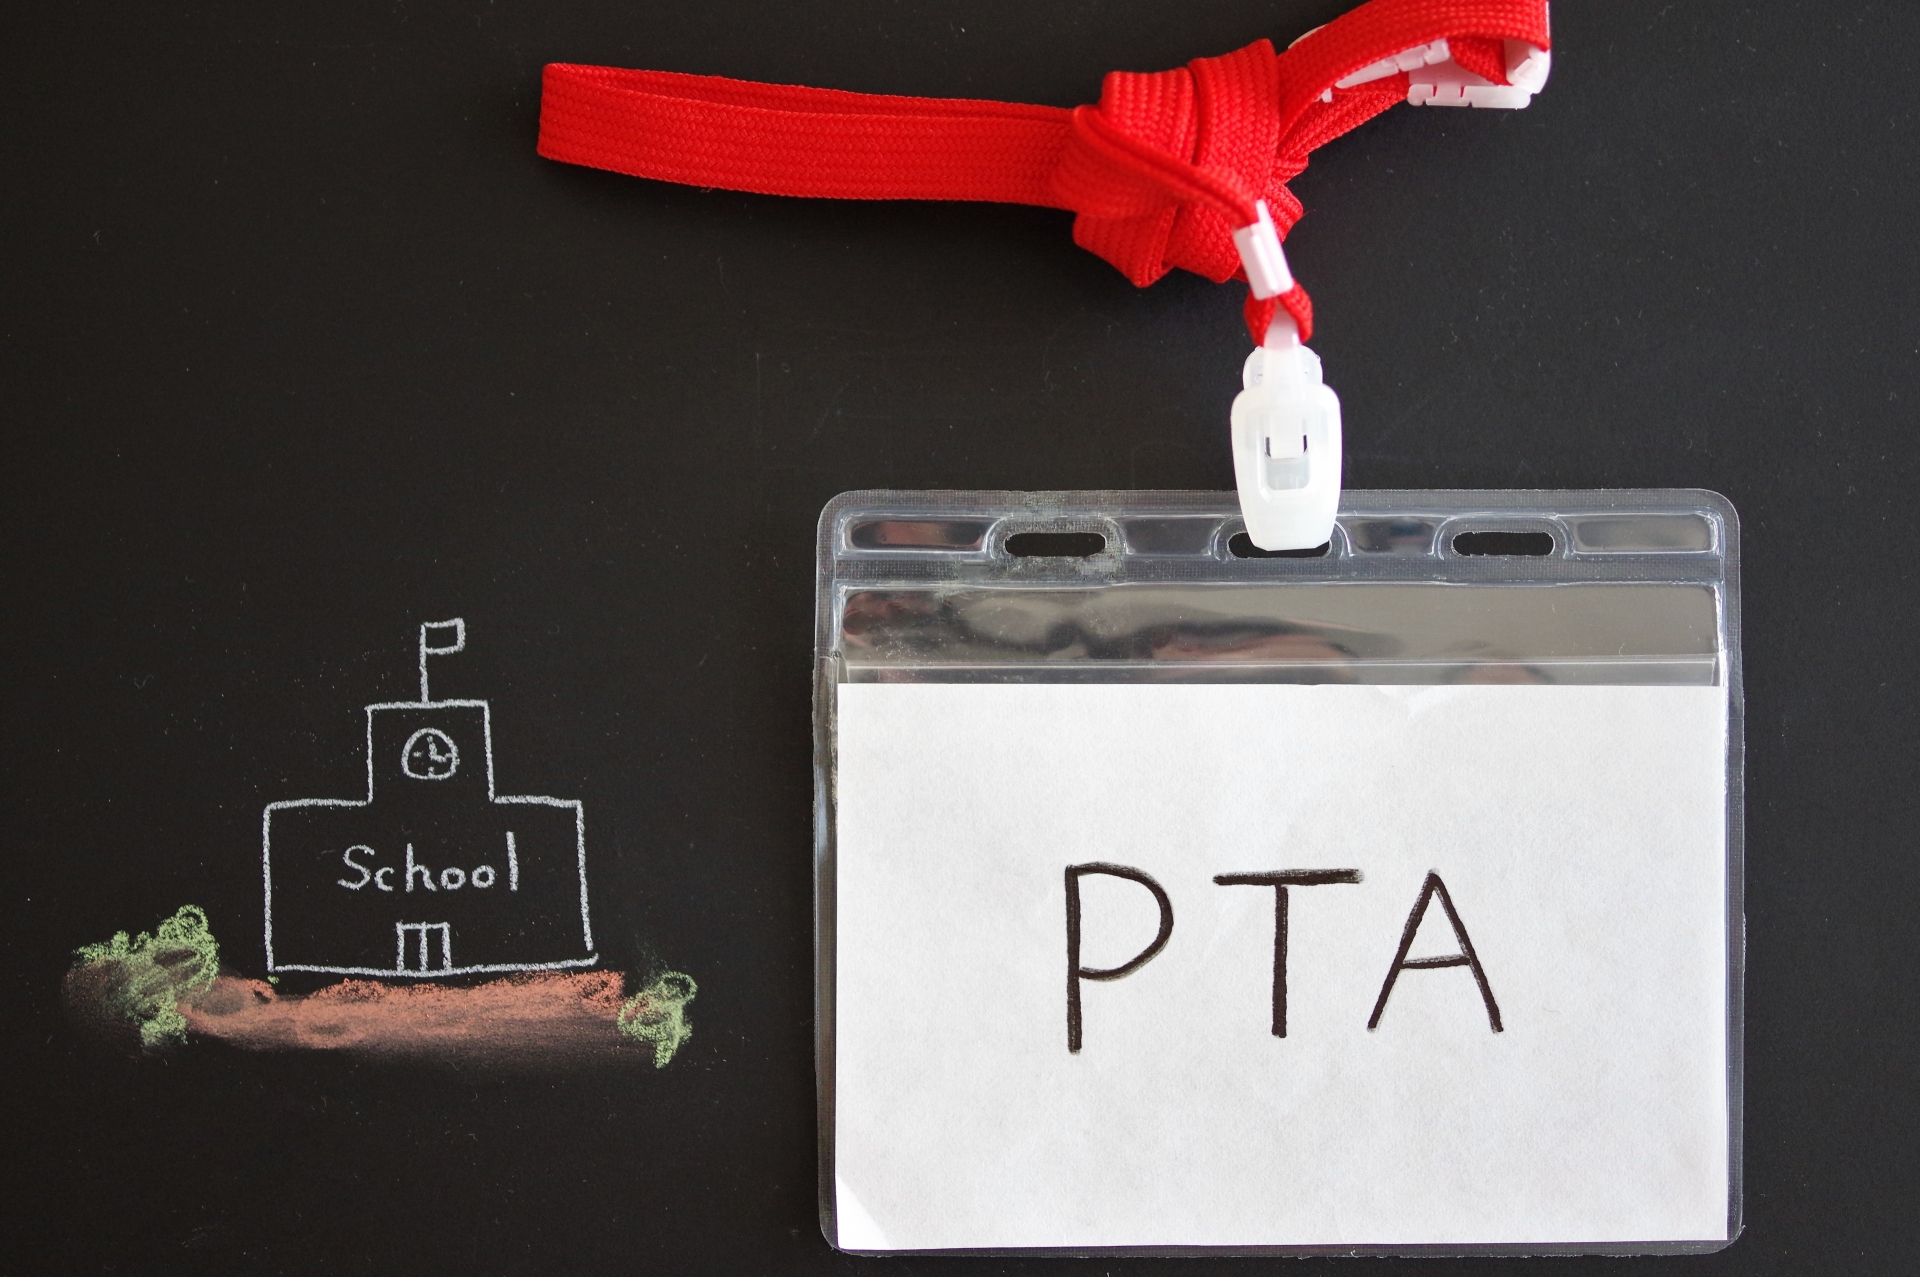 PTAを退会したいという家庭への対応とPTAに対する考え方